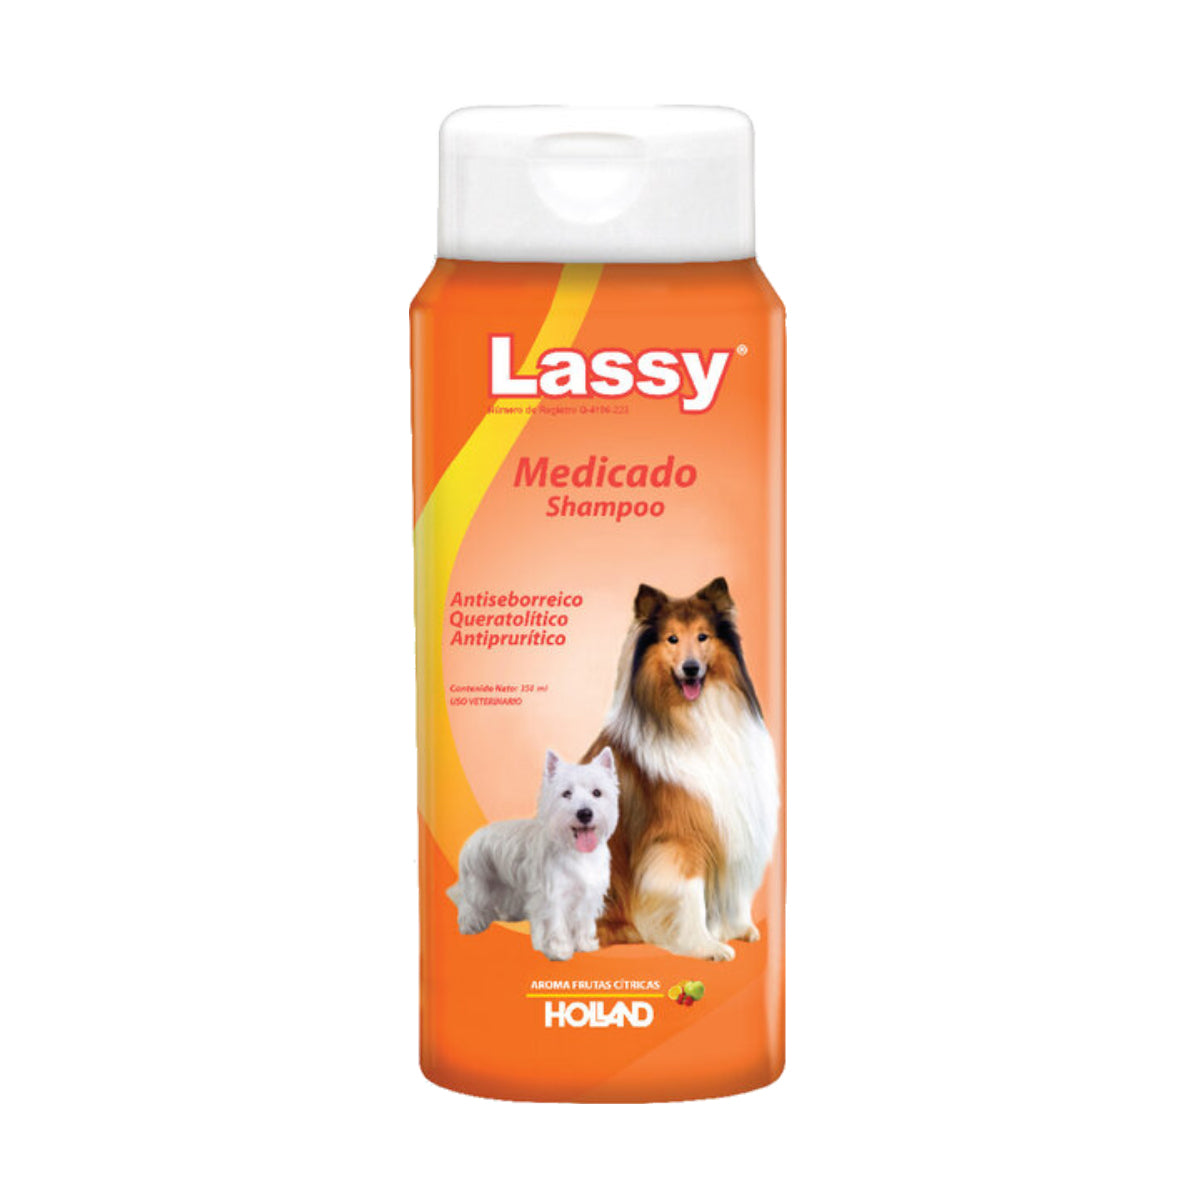 Shampoo Medicado Lassy Holland 350 ml